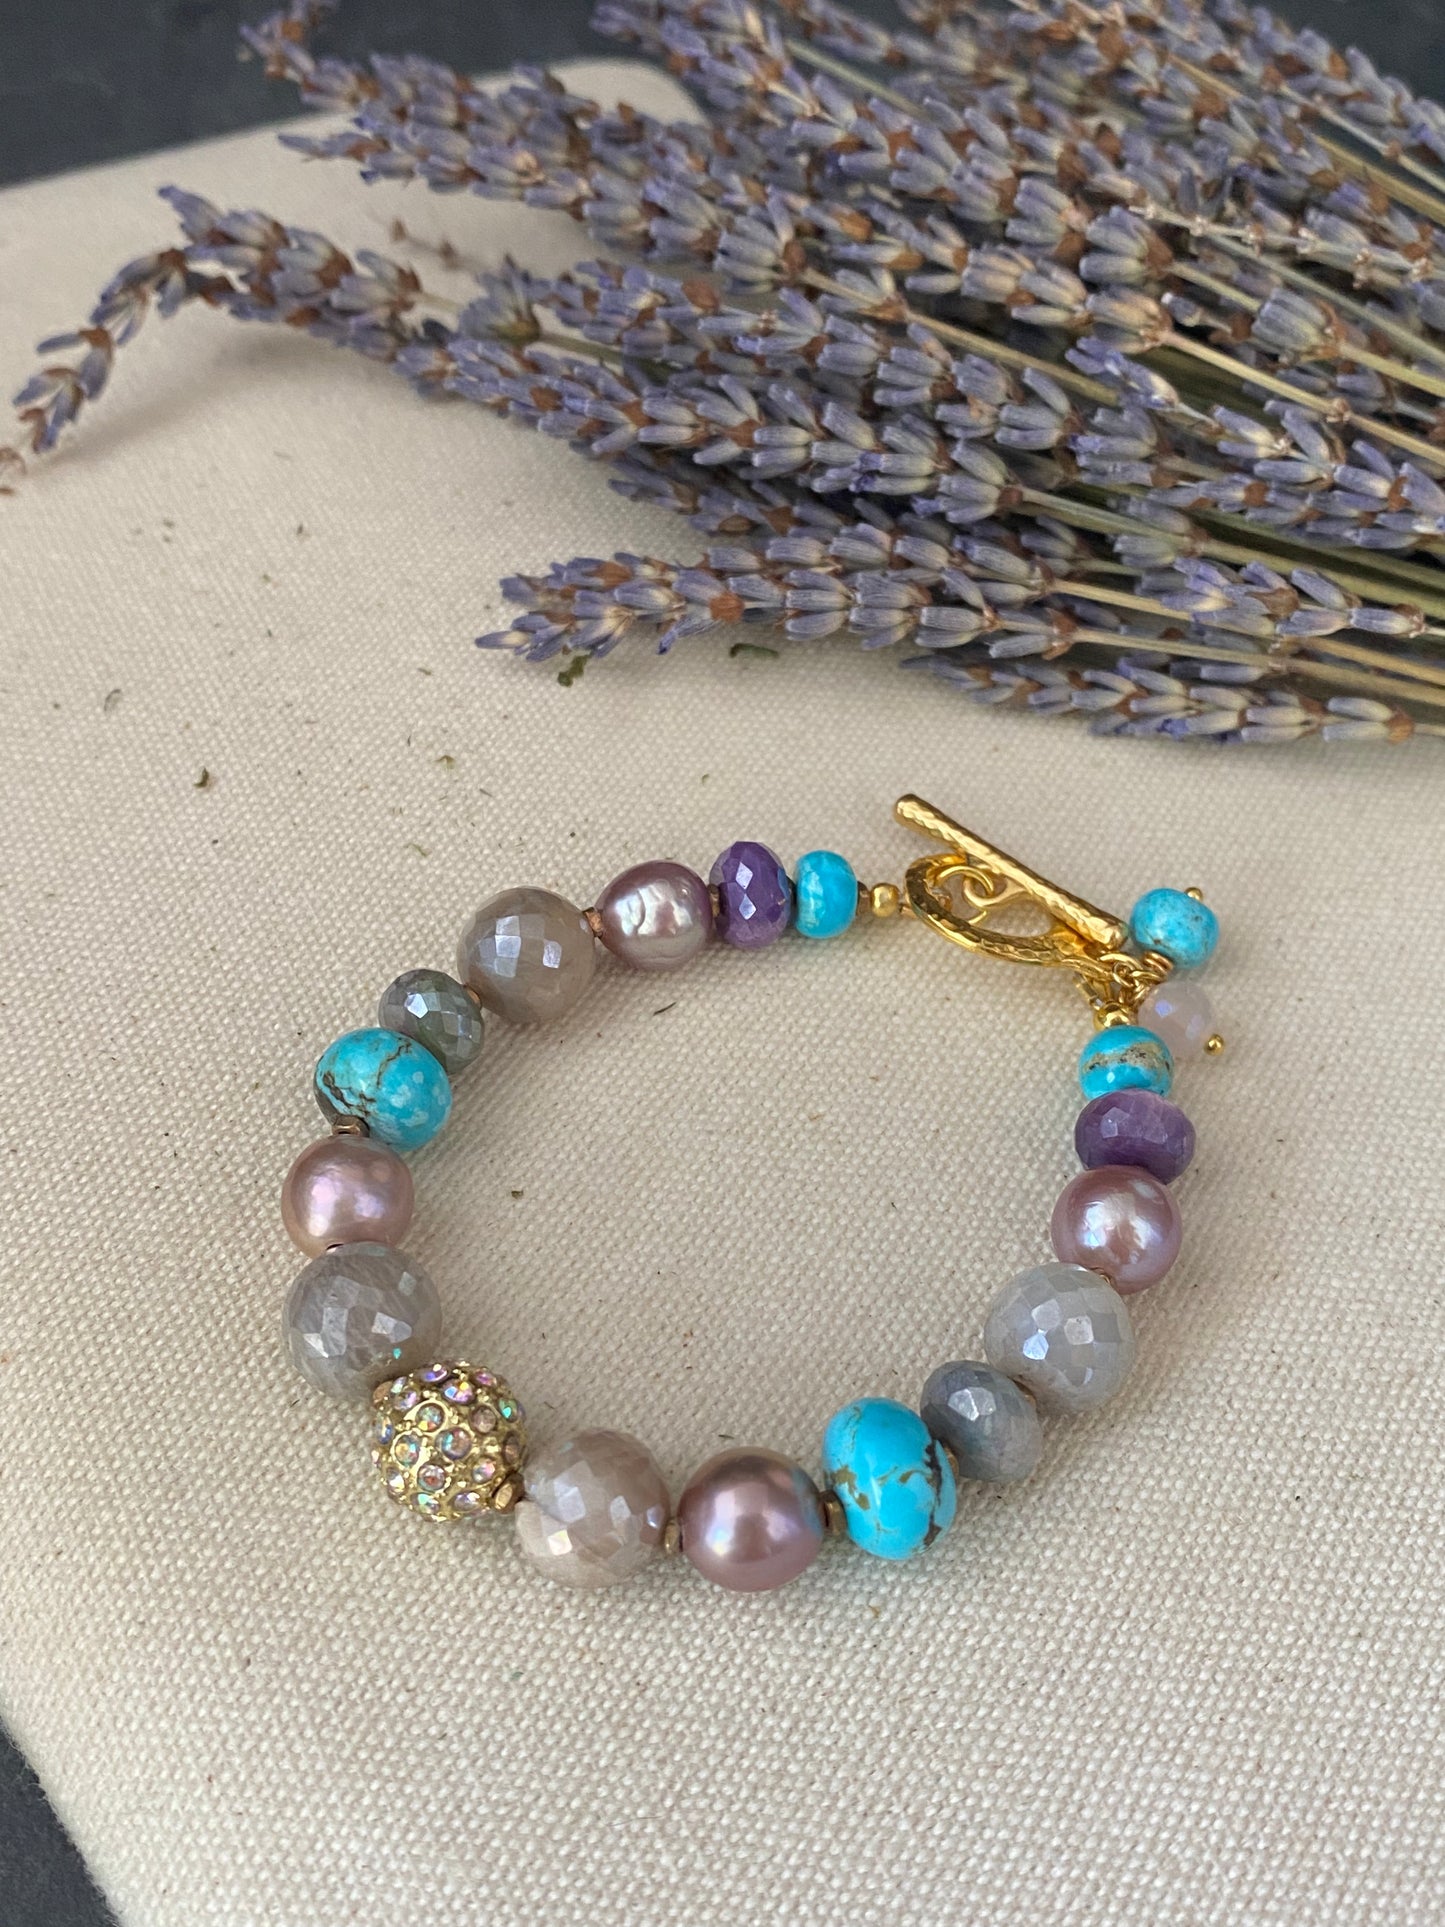 Pink pearls, blue turquoise stone, mystic moonstone, gold metal, bracelet.